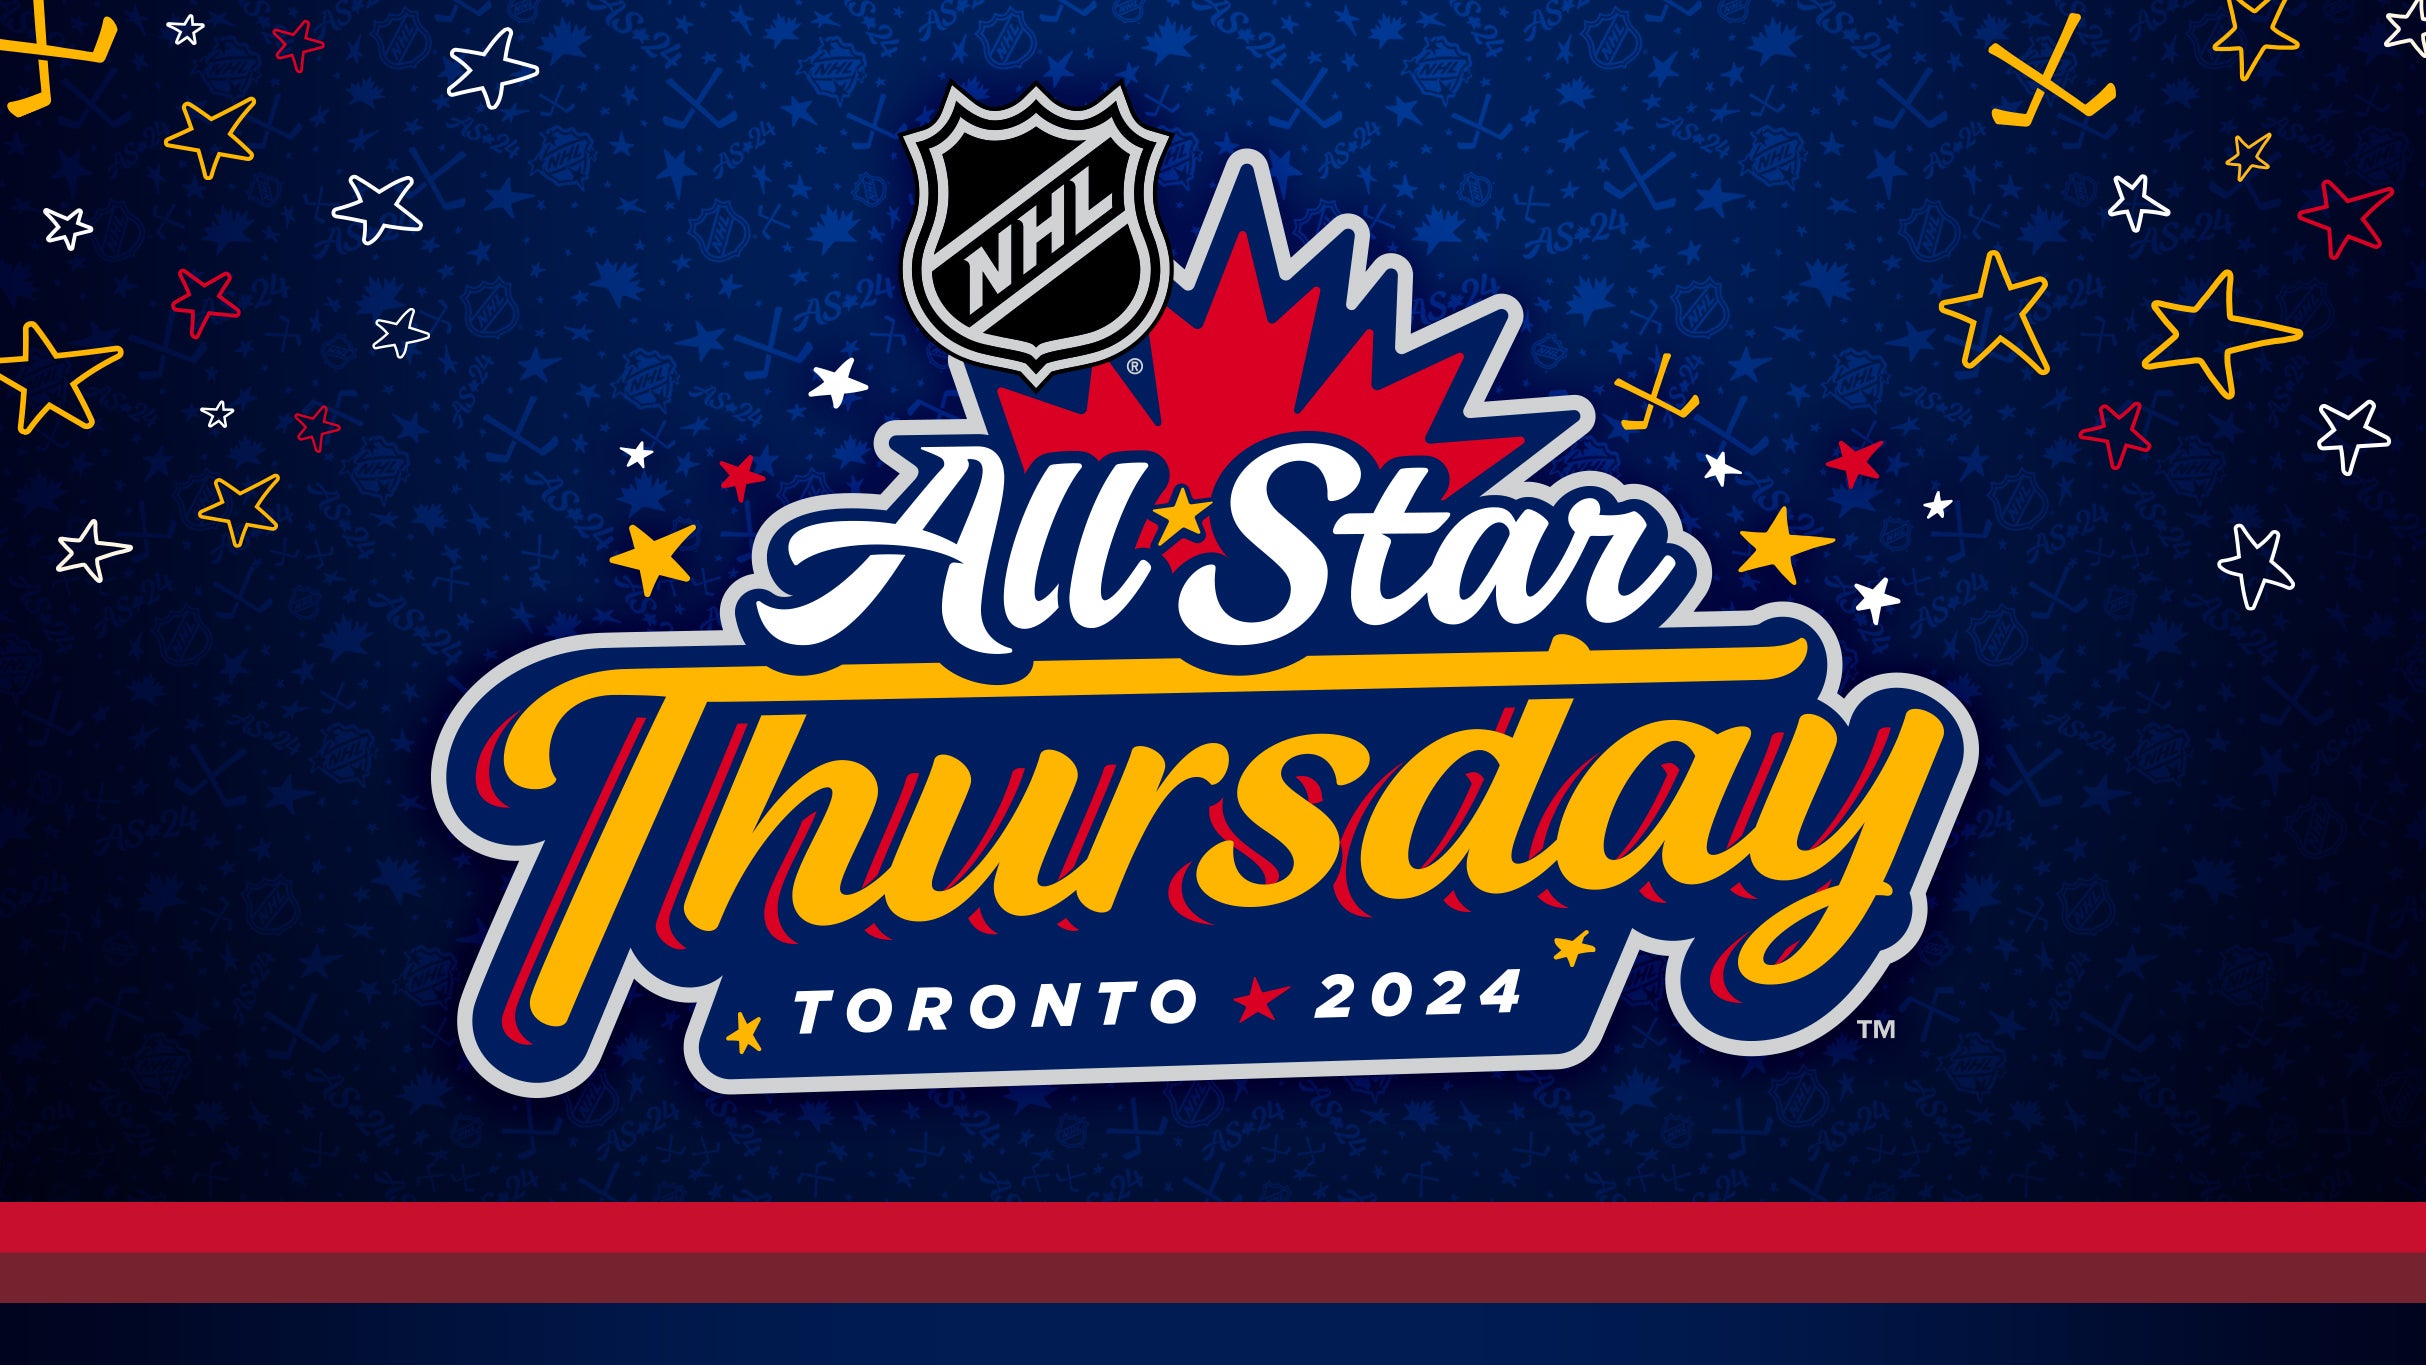 NHL All-Star Thursday in Toronto promo photo for Toronto Maple Leafs Presale presale offer code